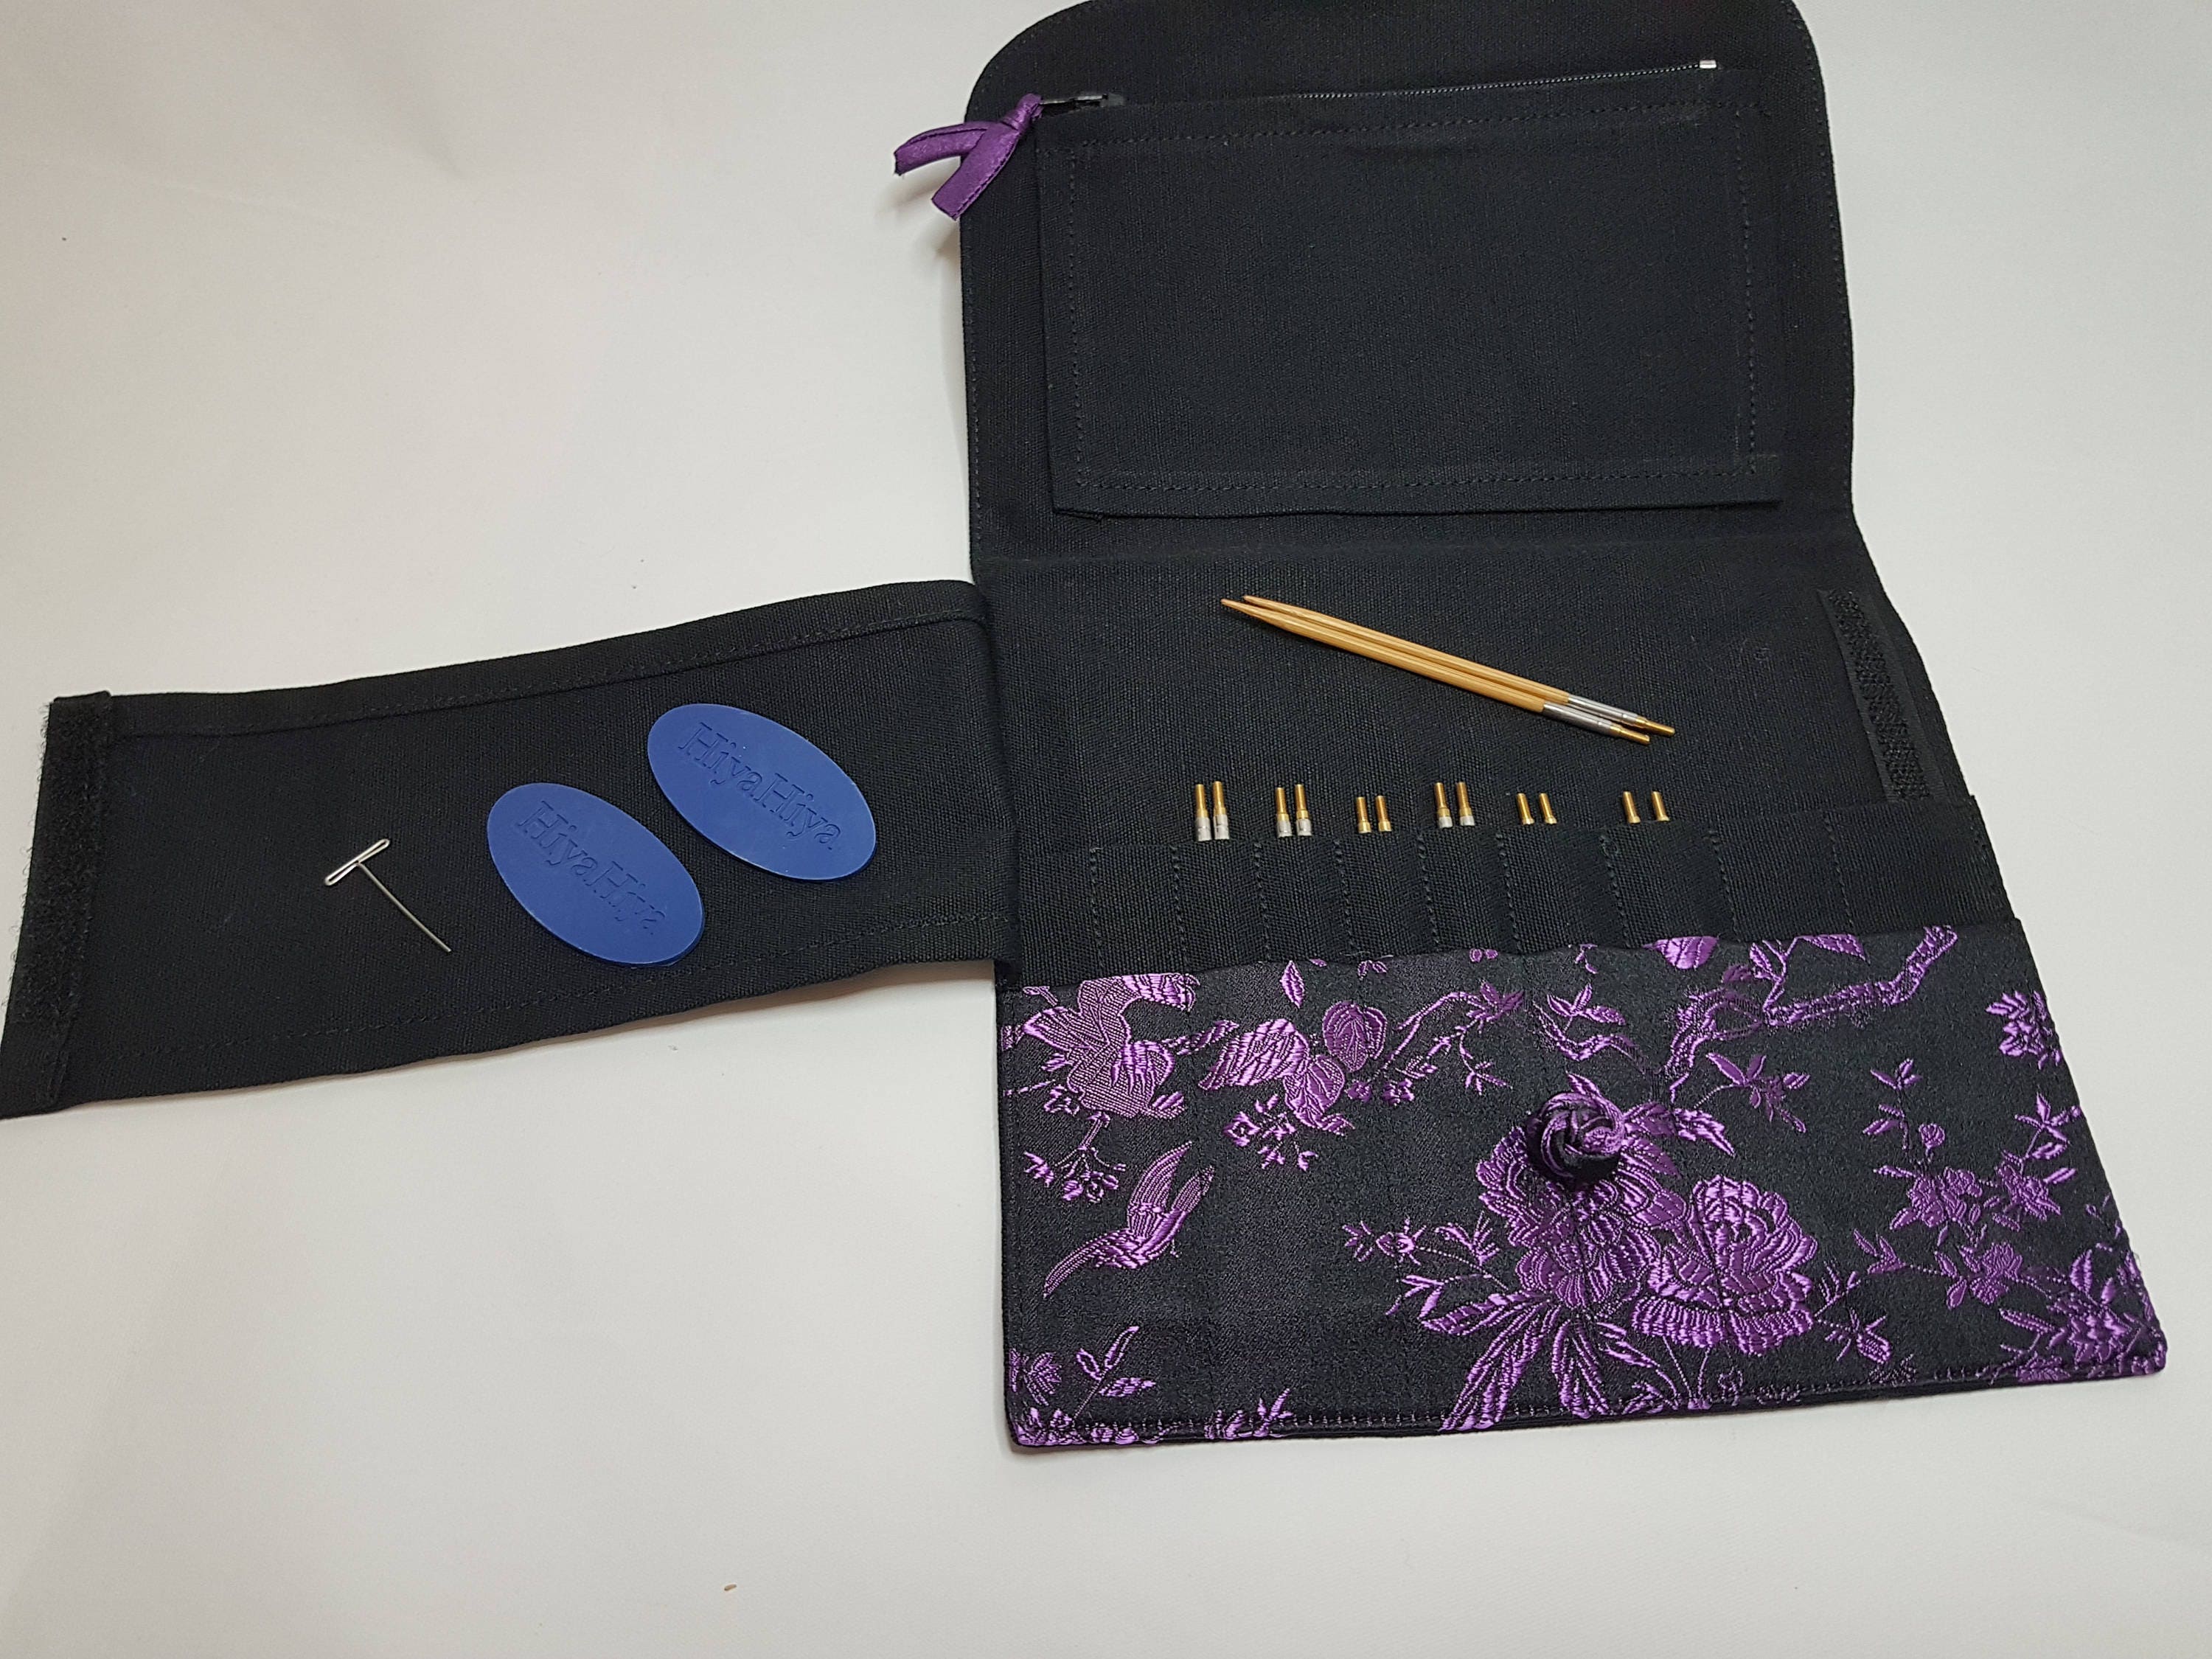 Hiyahiya Sharp Standard Interchangeable Knitting Needle Set 